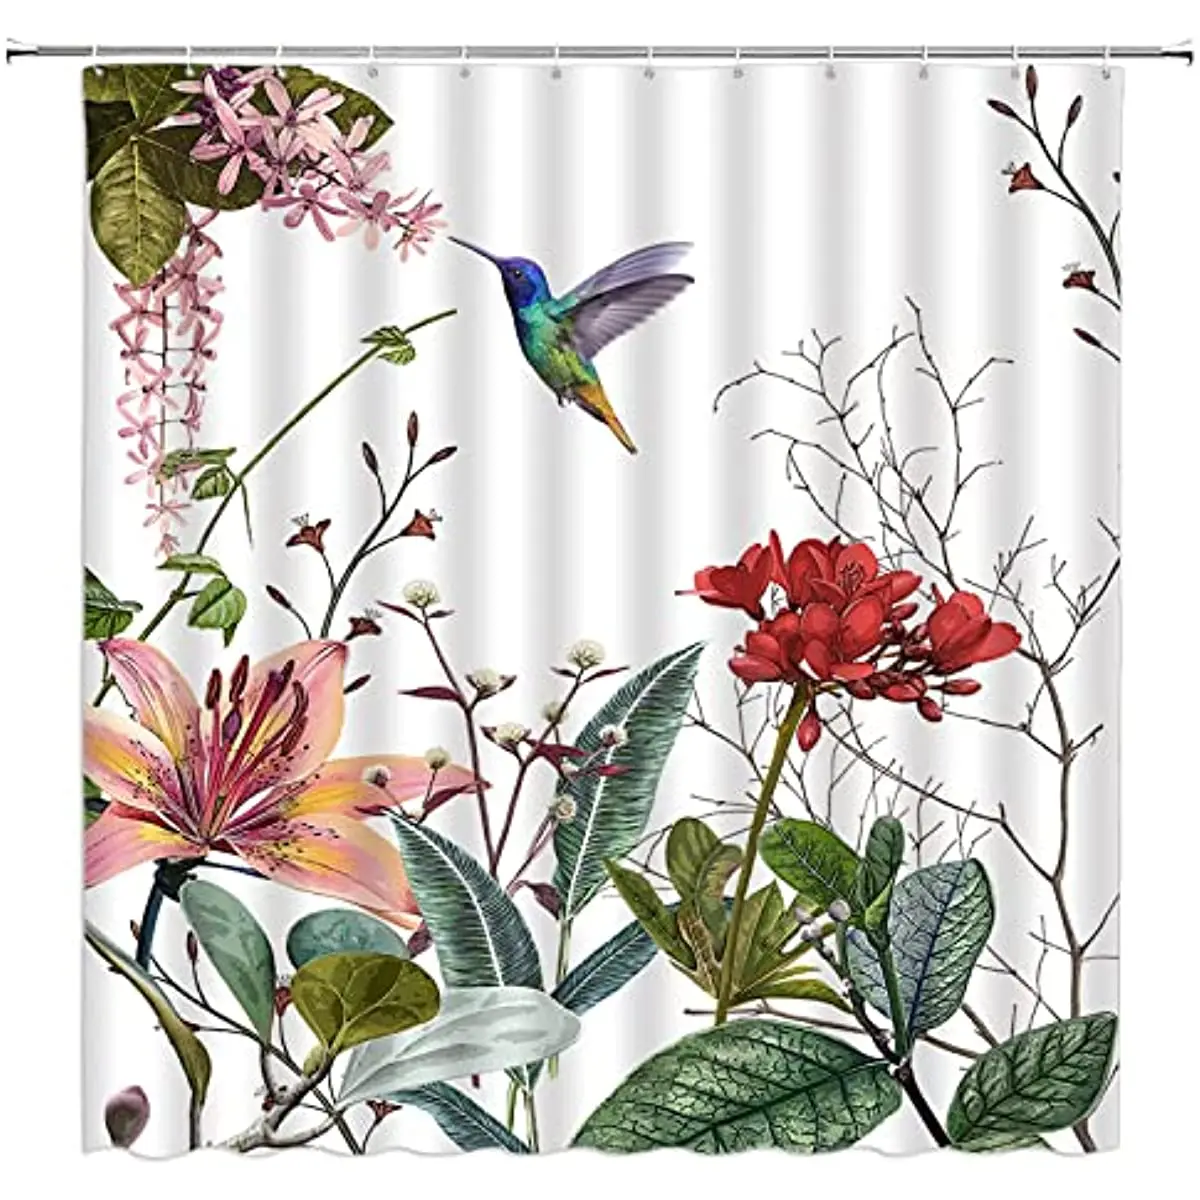 

Tropical Plant Shower Curtain Watercolor Floral Hummingbird Green Leaves Botanical Jungle Sanitary Napkin Curtain Bathroom Decor